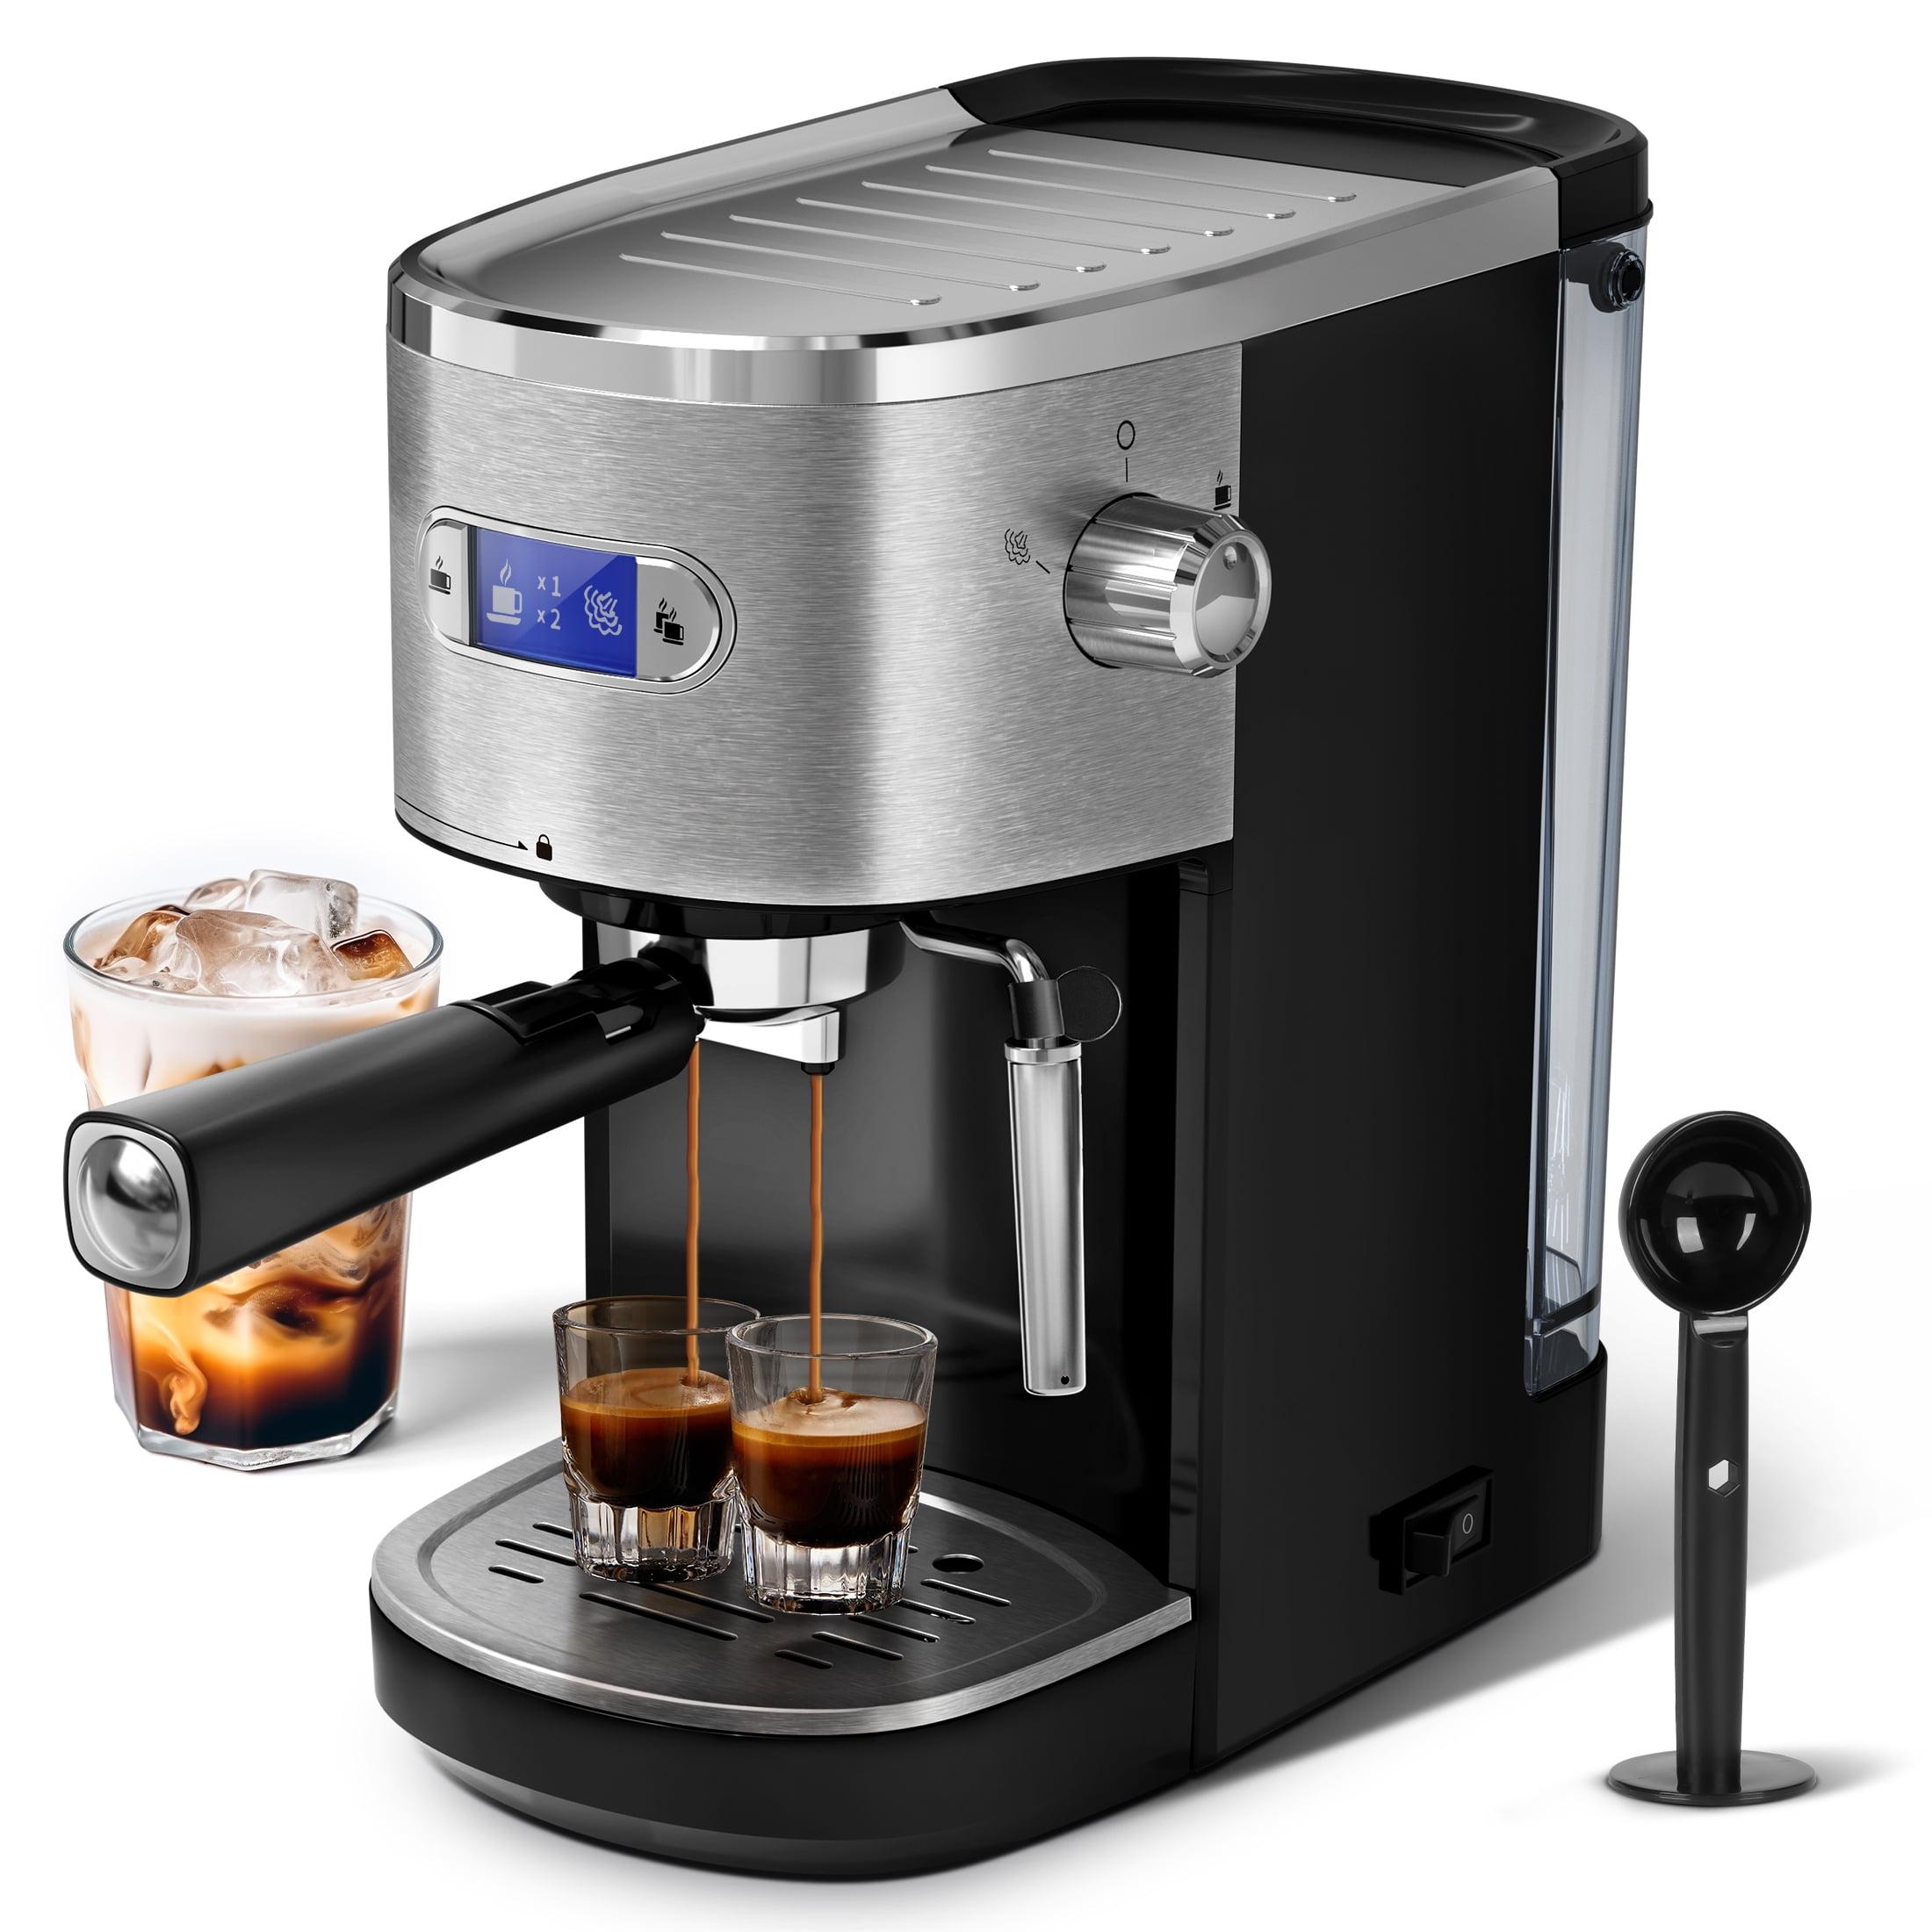 Arzum Okka Automatic Turkish Coffee Machine, Maker, USA 120V UL, Black/Chrome